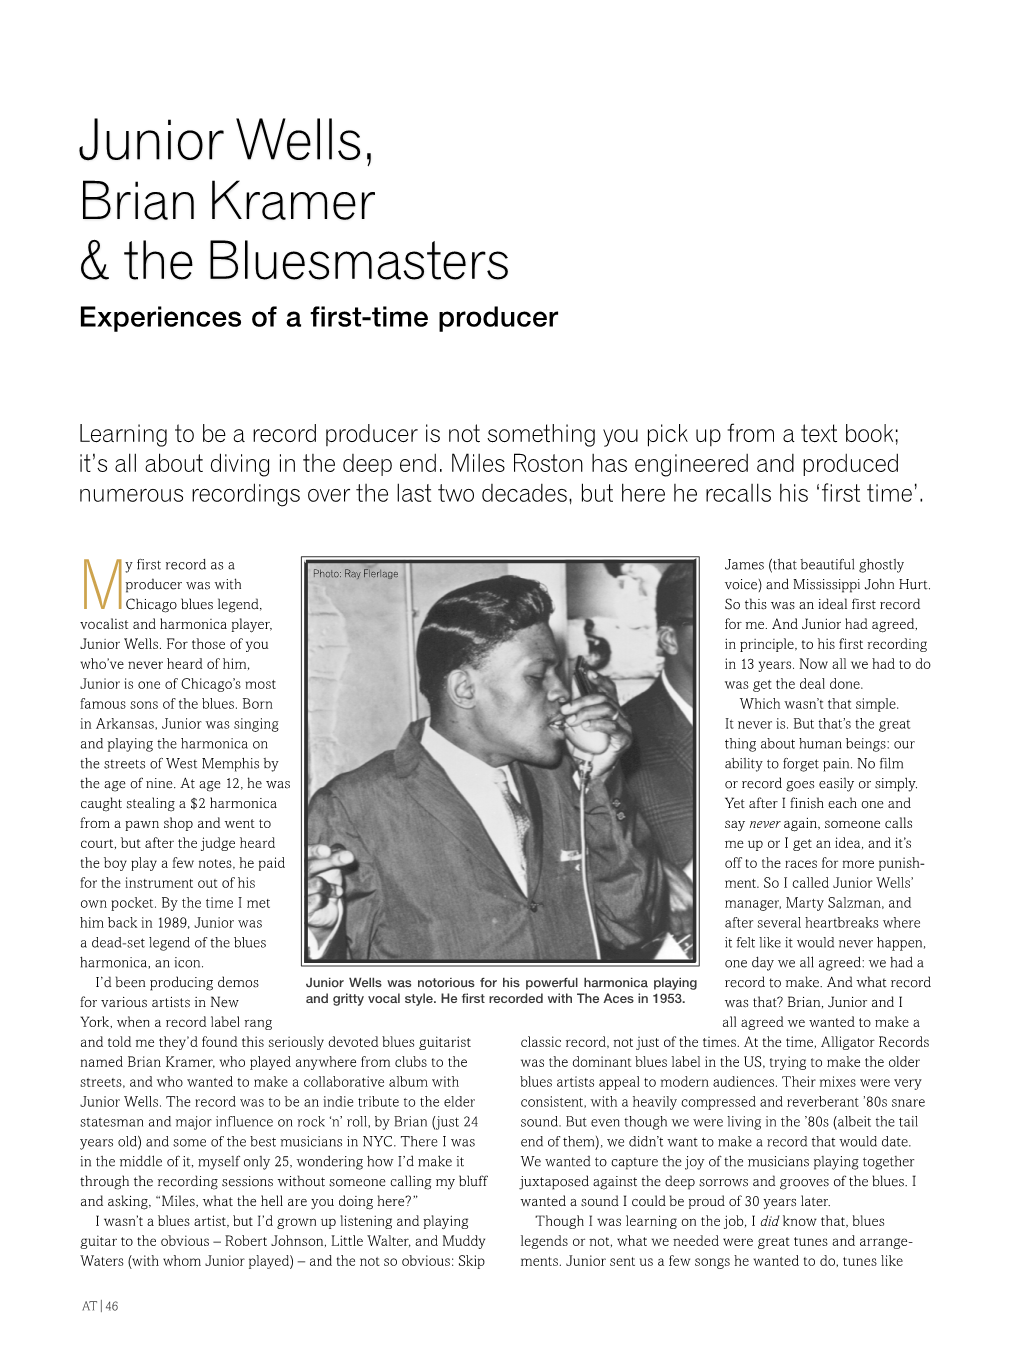 Junior Wells, Brian Kramer & the Bluesmasters Issue 38